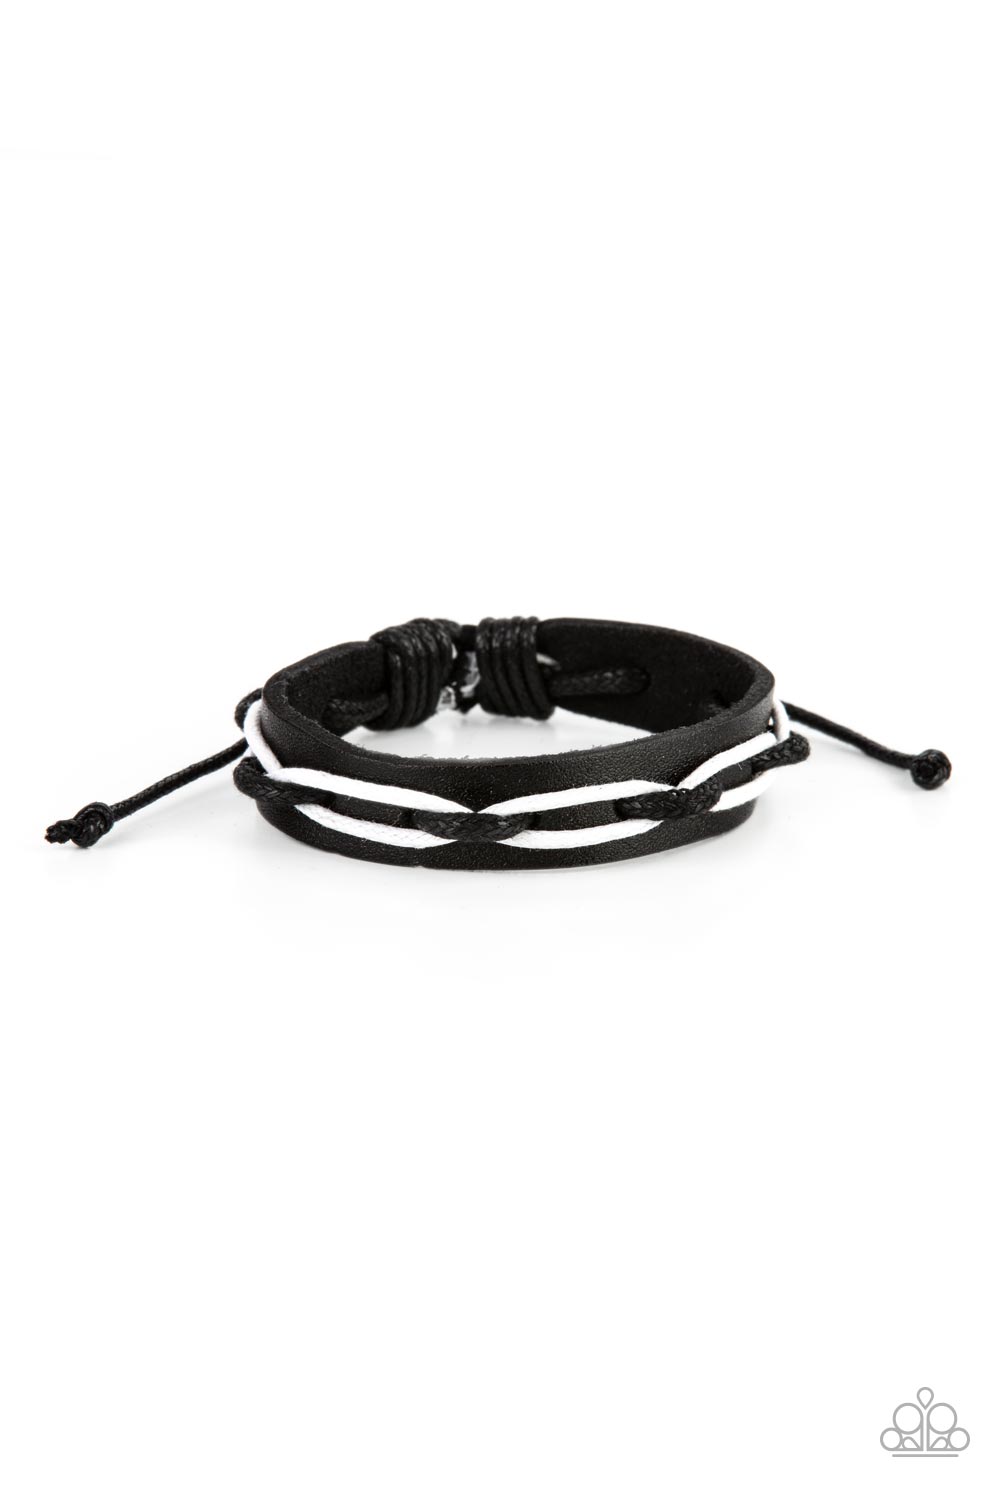 Lucky Locomotion Black Leather Urban Bracelet - Paparazzi Accessories- lightbox - CarasShop.com - $5 Jewelry by Cara Jewels